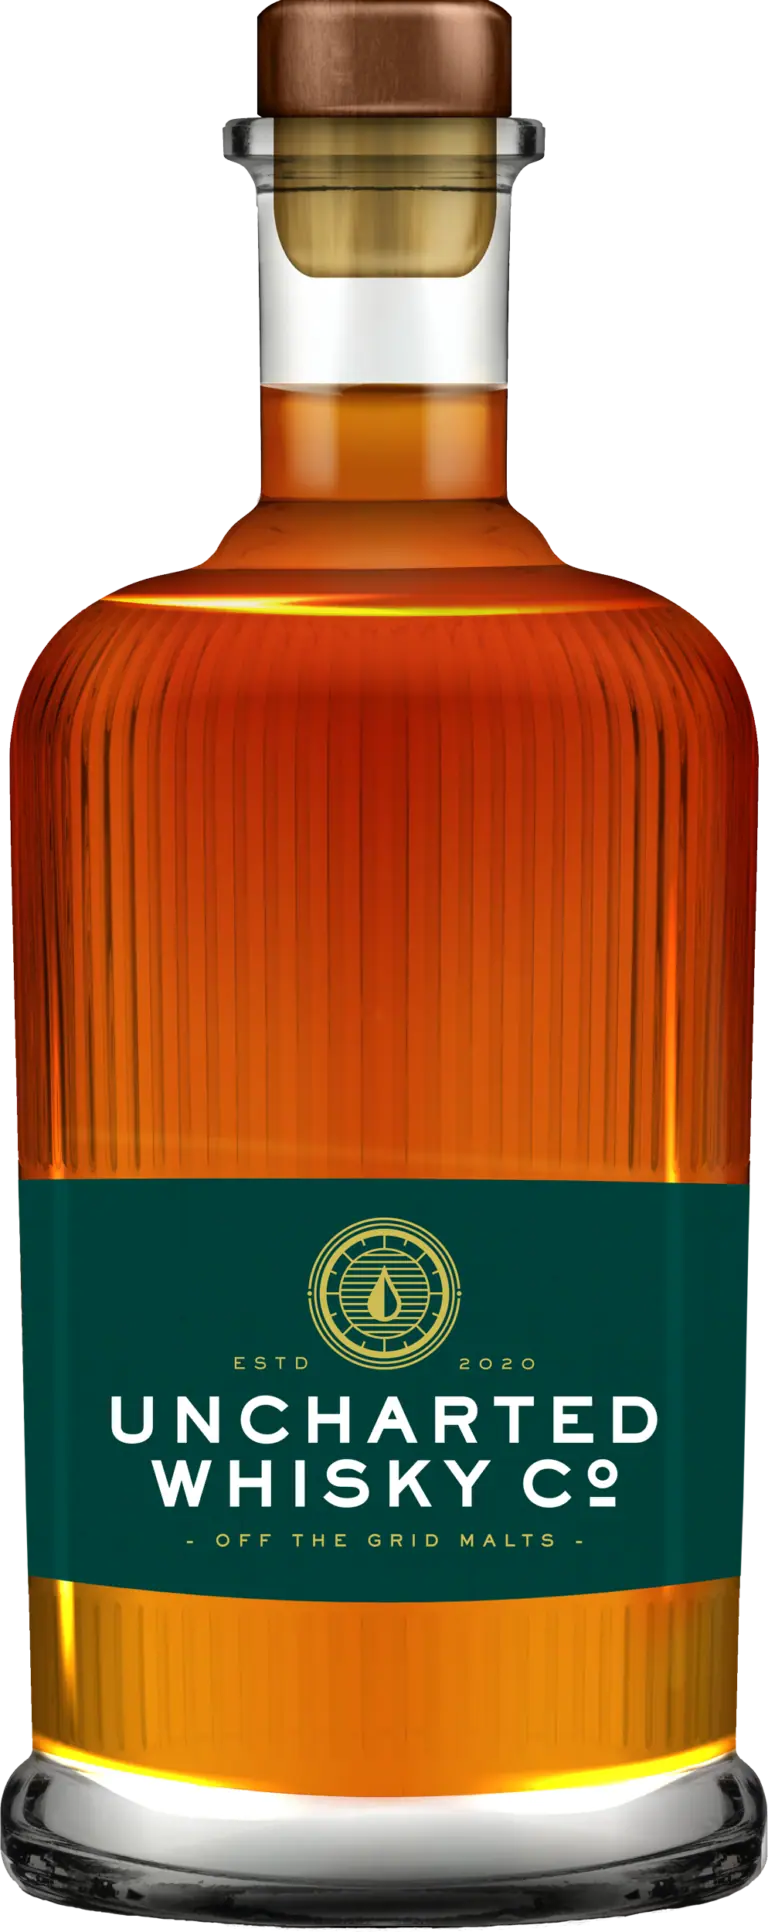 Uncharted Whisky Bottle